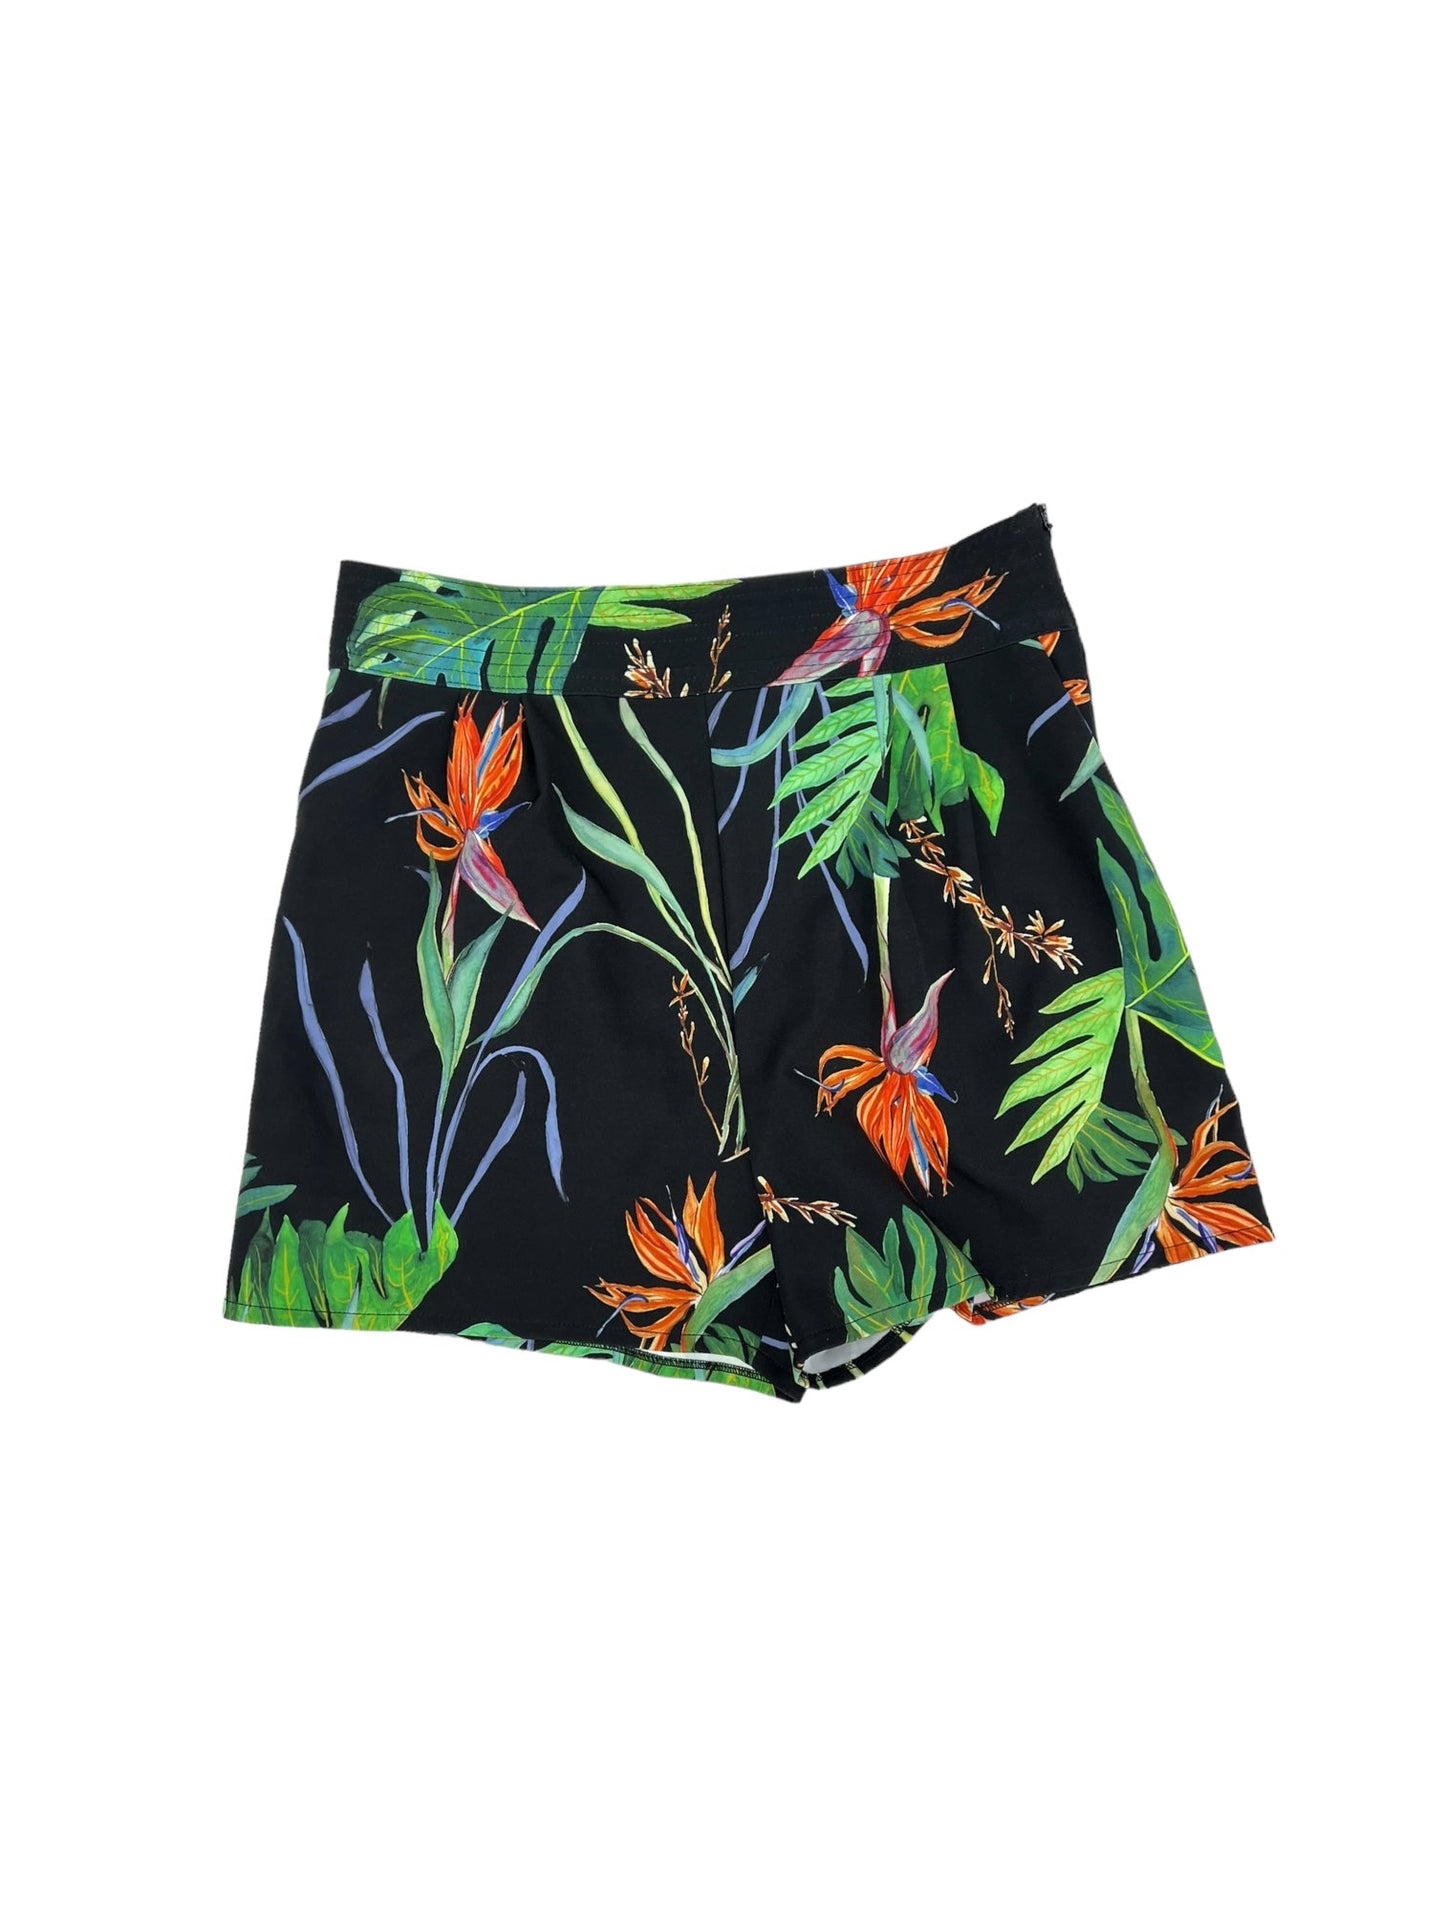 Tropical Print Shorts Clothes Mentor, Size 8